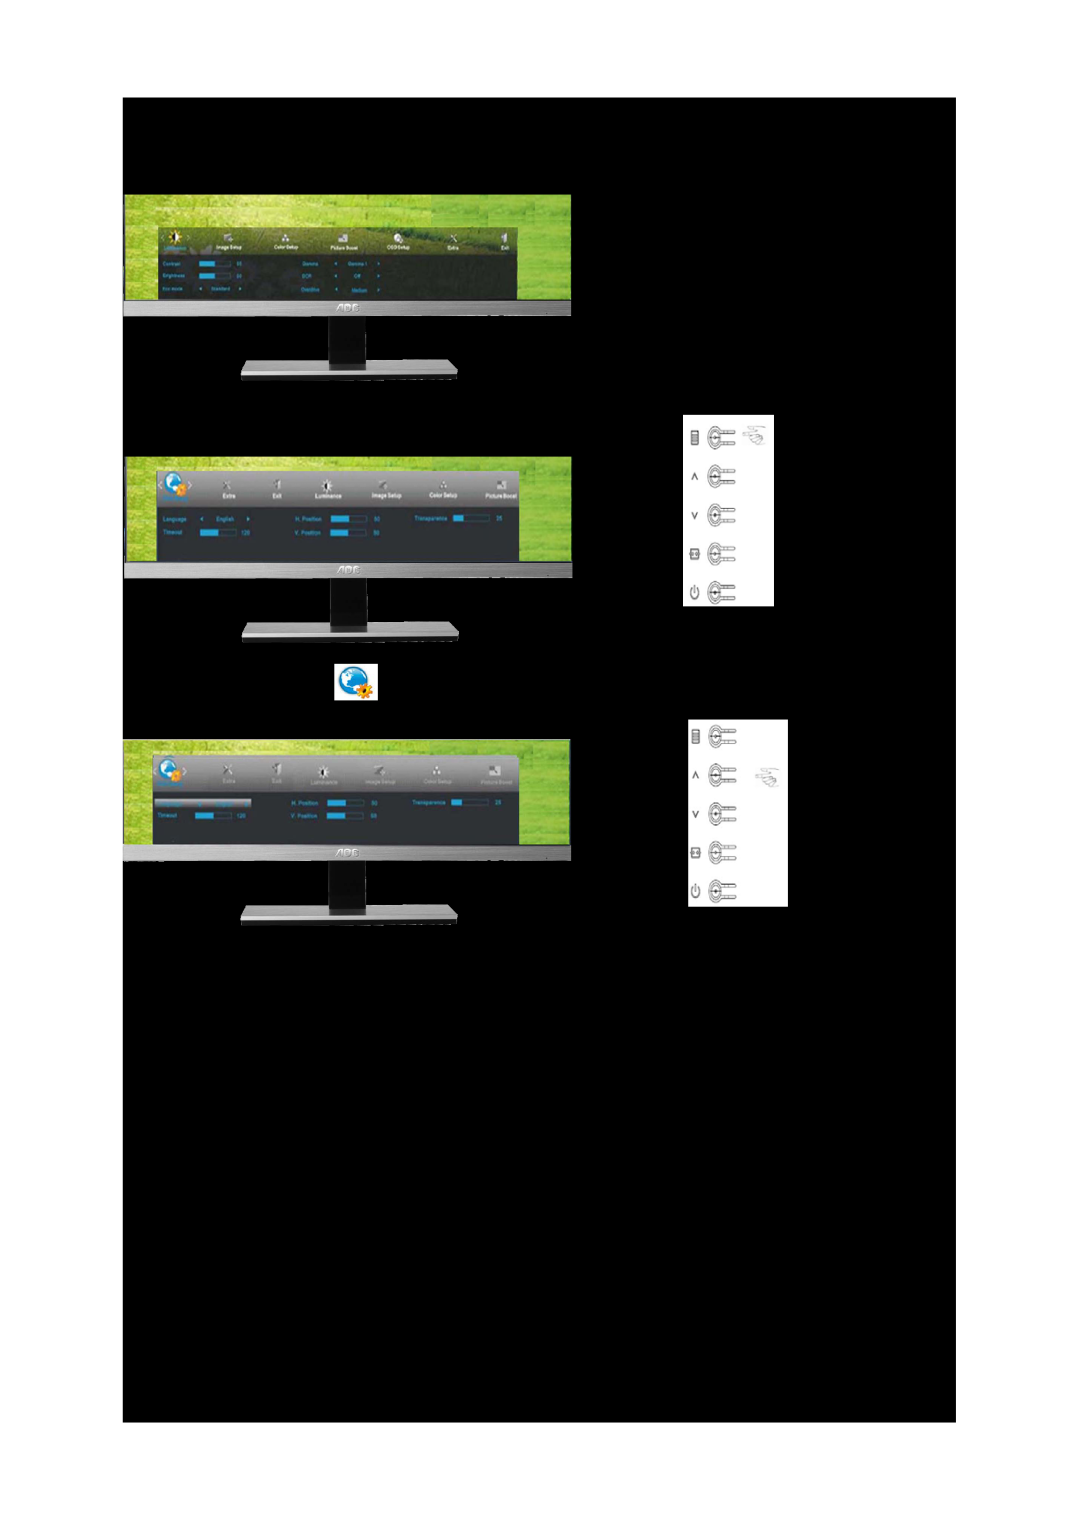 AOC D2267PW, D2367P Press MENU Menu to display menu, Press ∧ or ∨ to select, OSD Setup, and press MENU to enter 